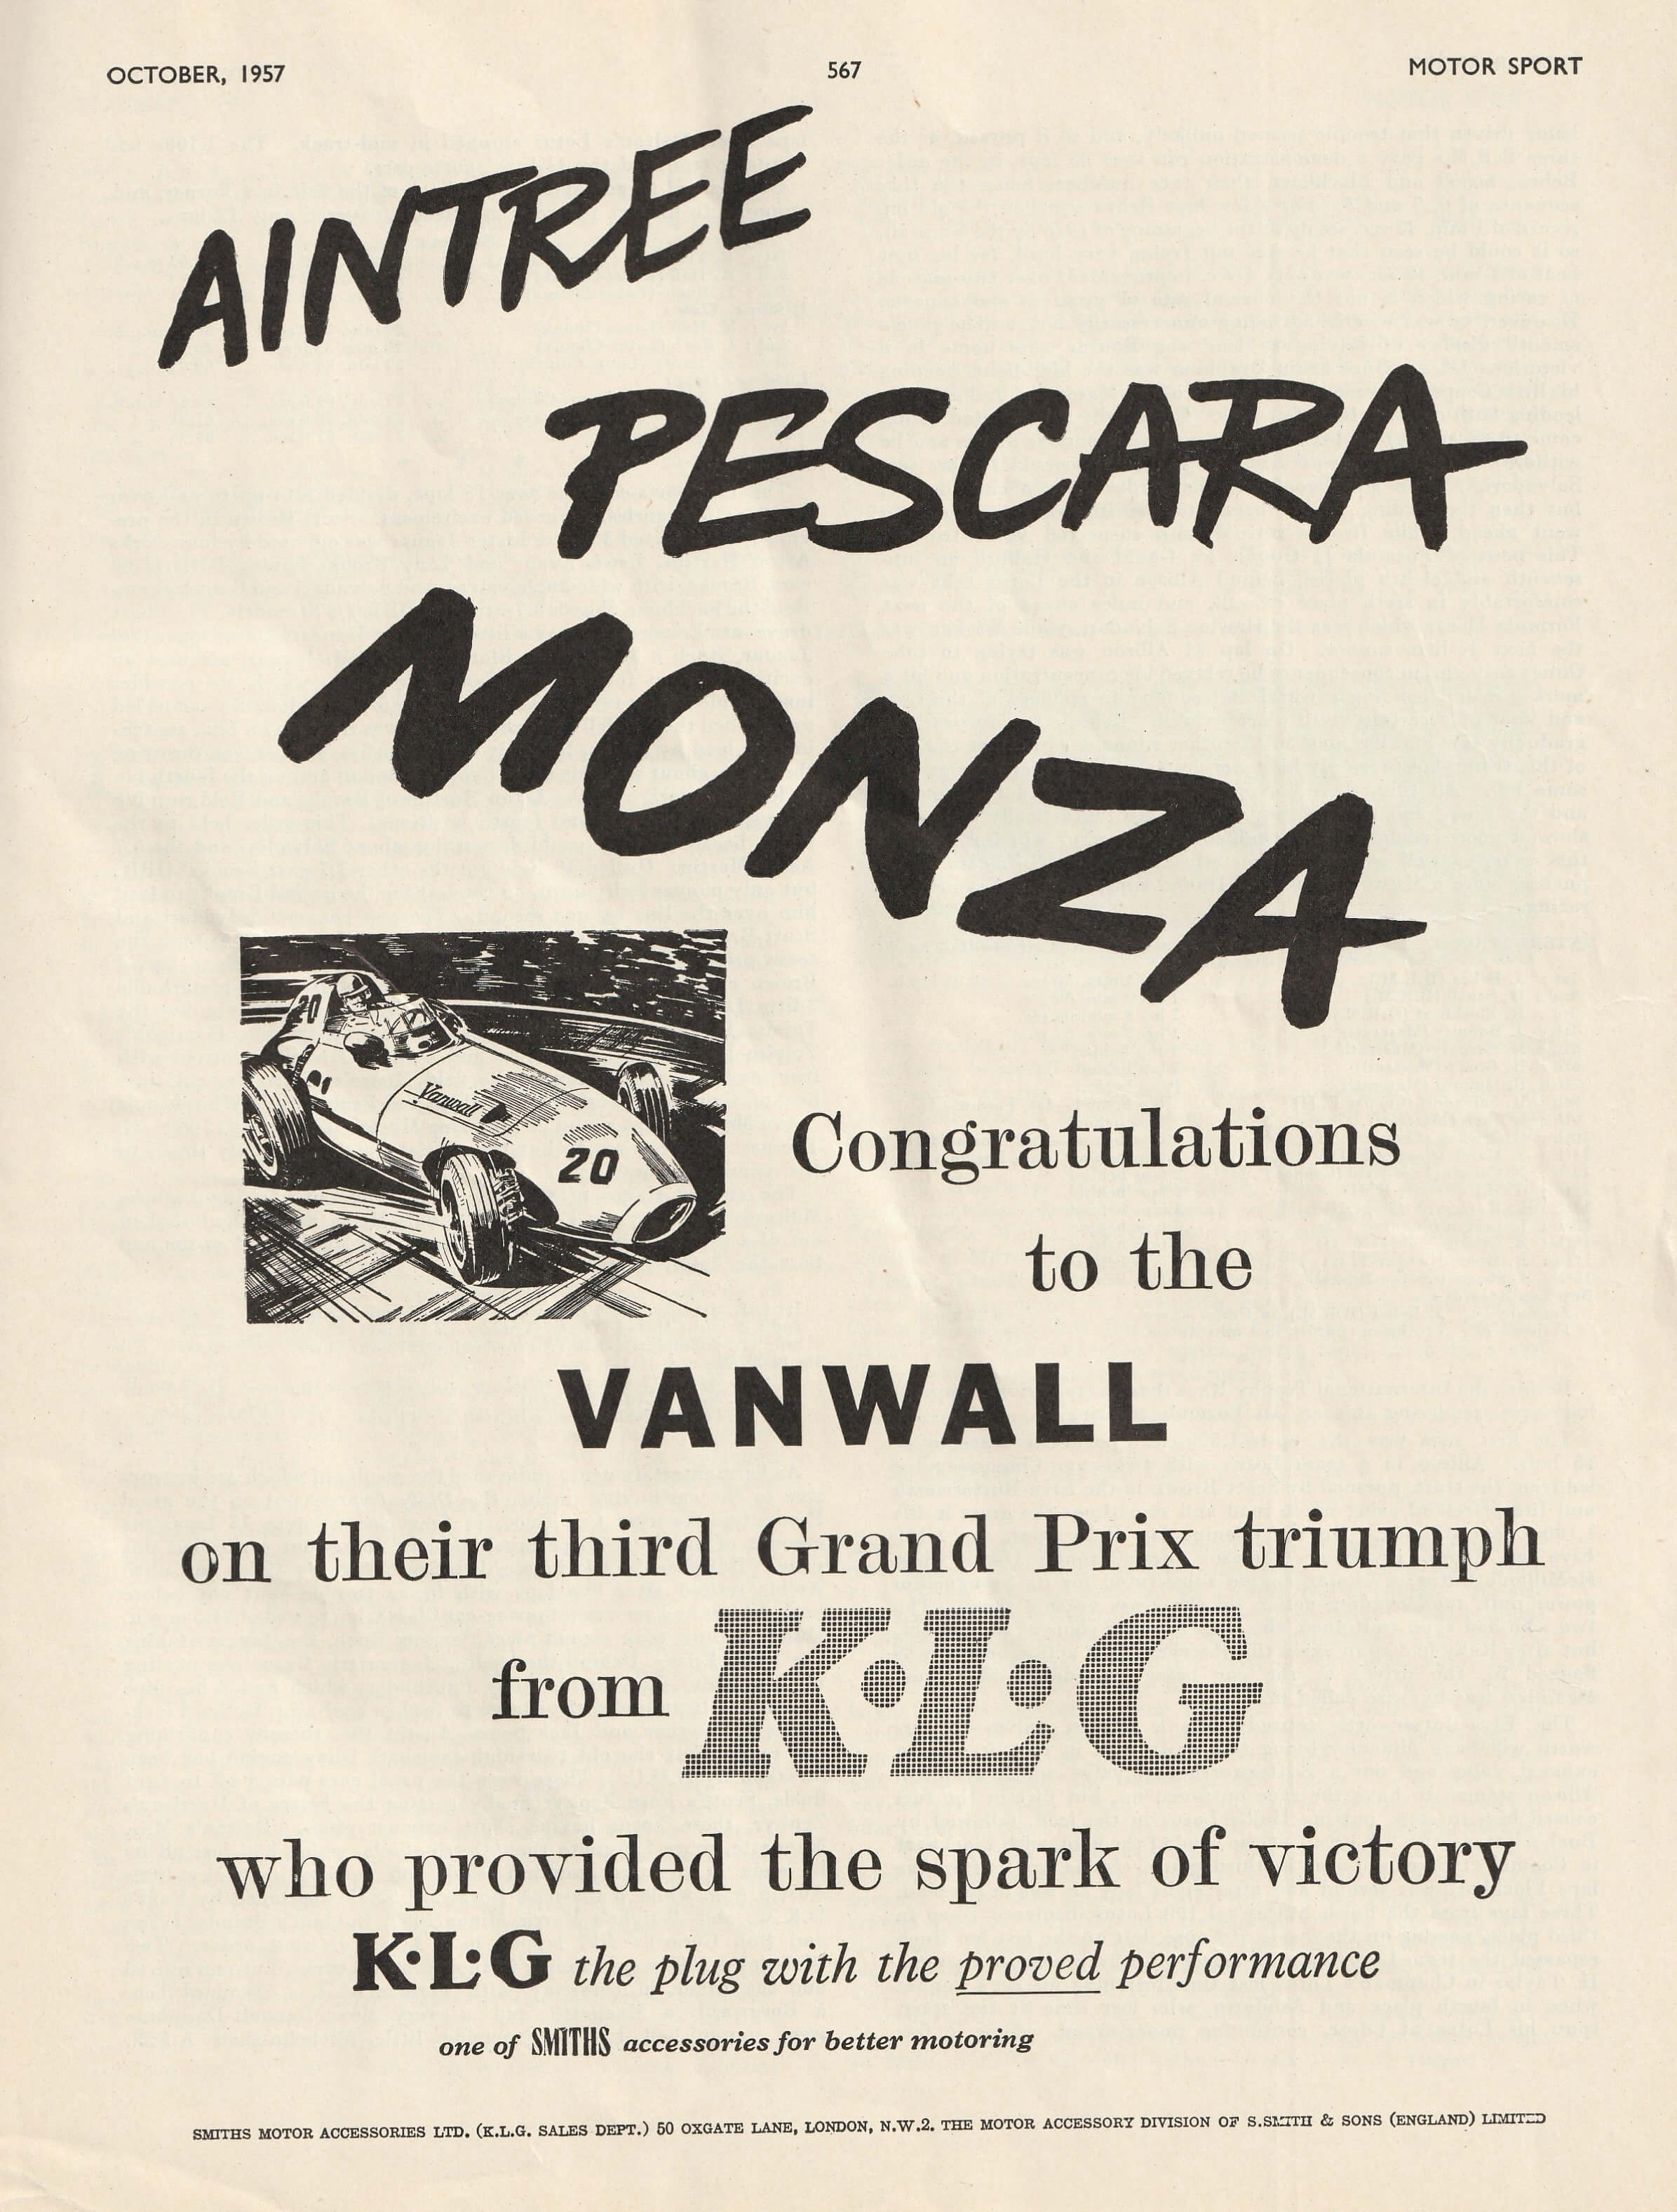 Celebrating Vanwall's wins in 1957